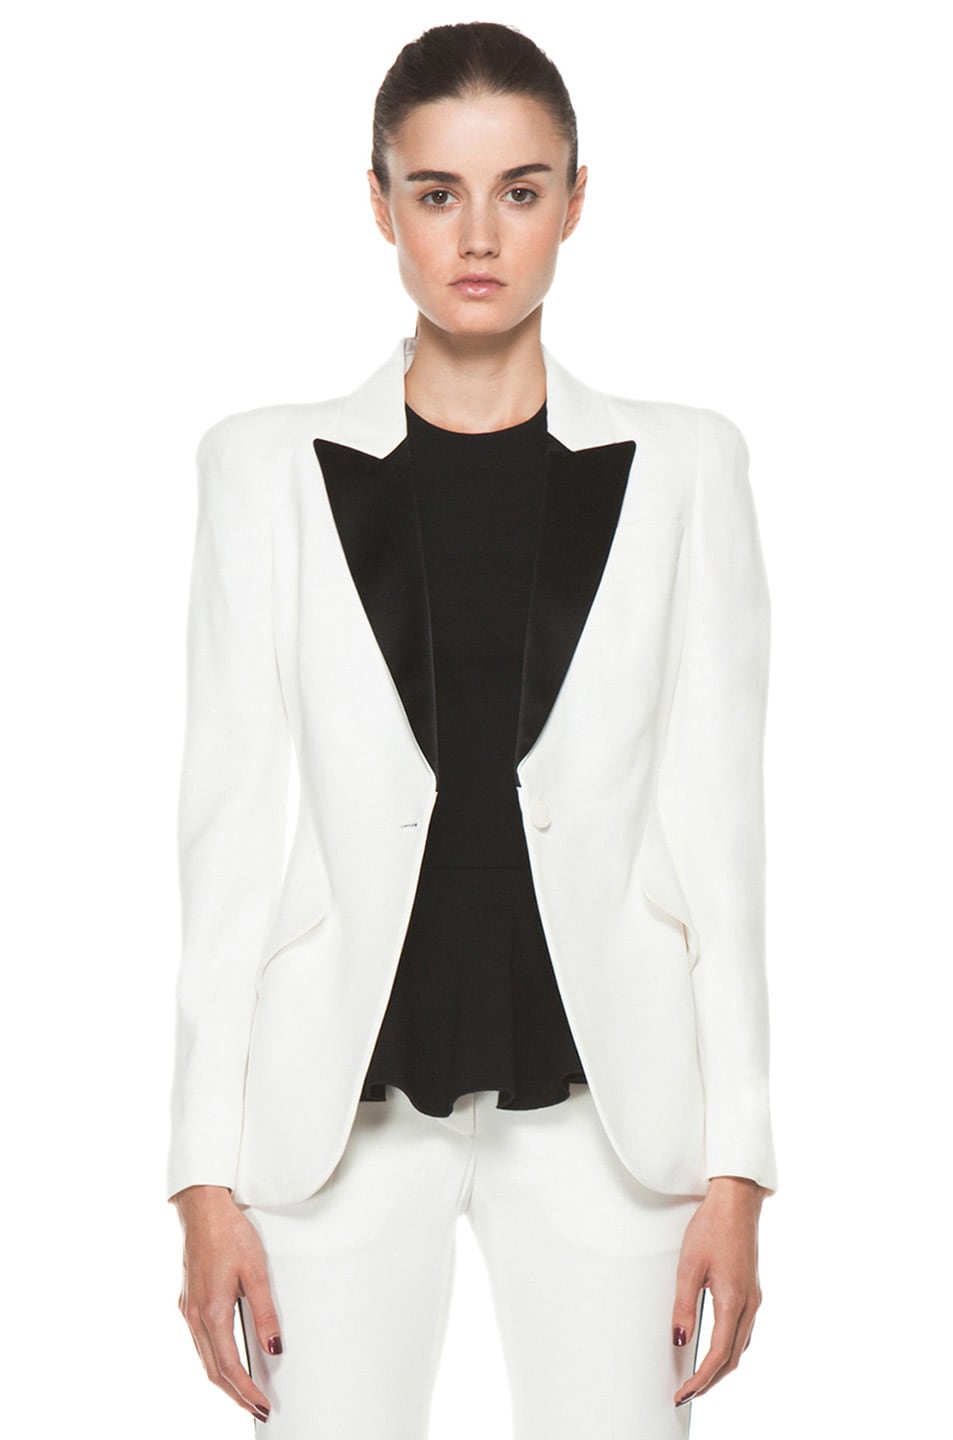 Alexander McQueen Tuxedo Jacket in Ivory | FWRD